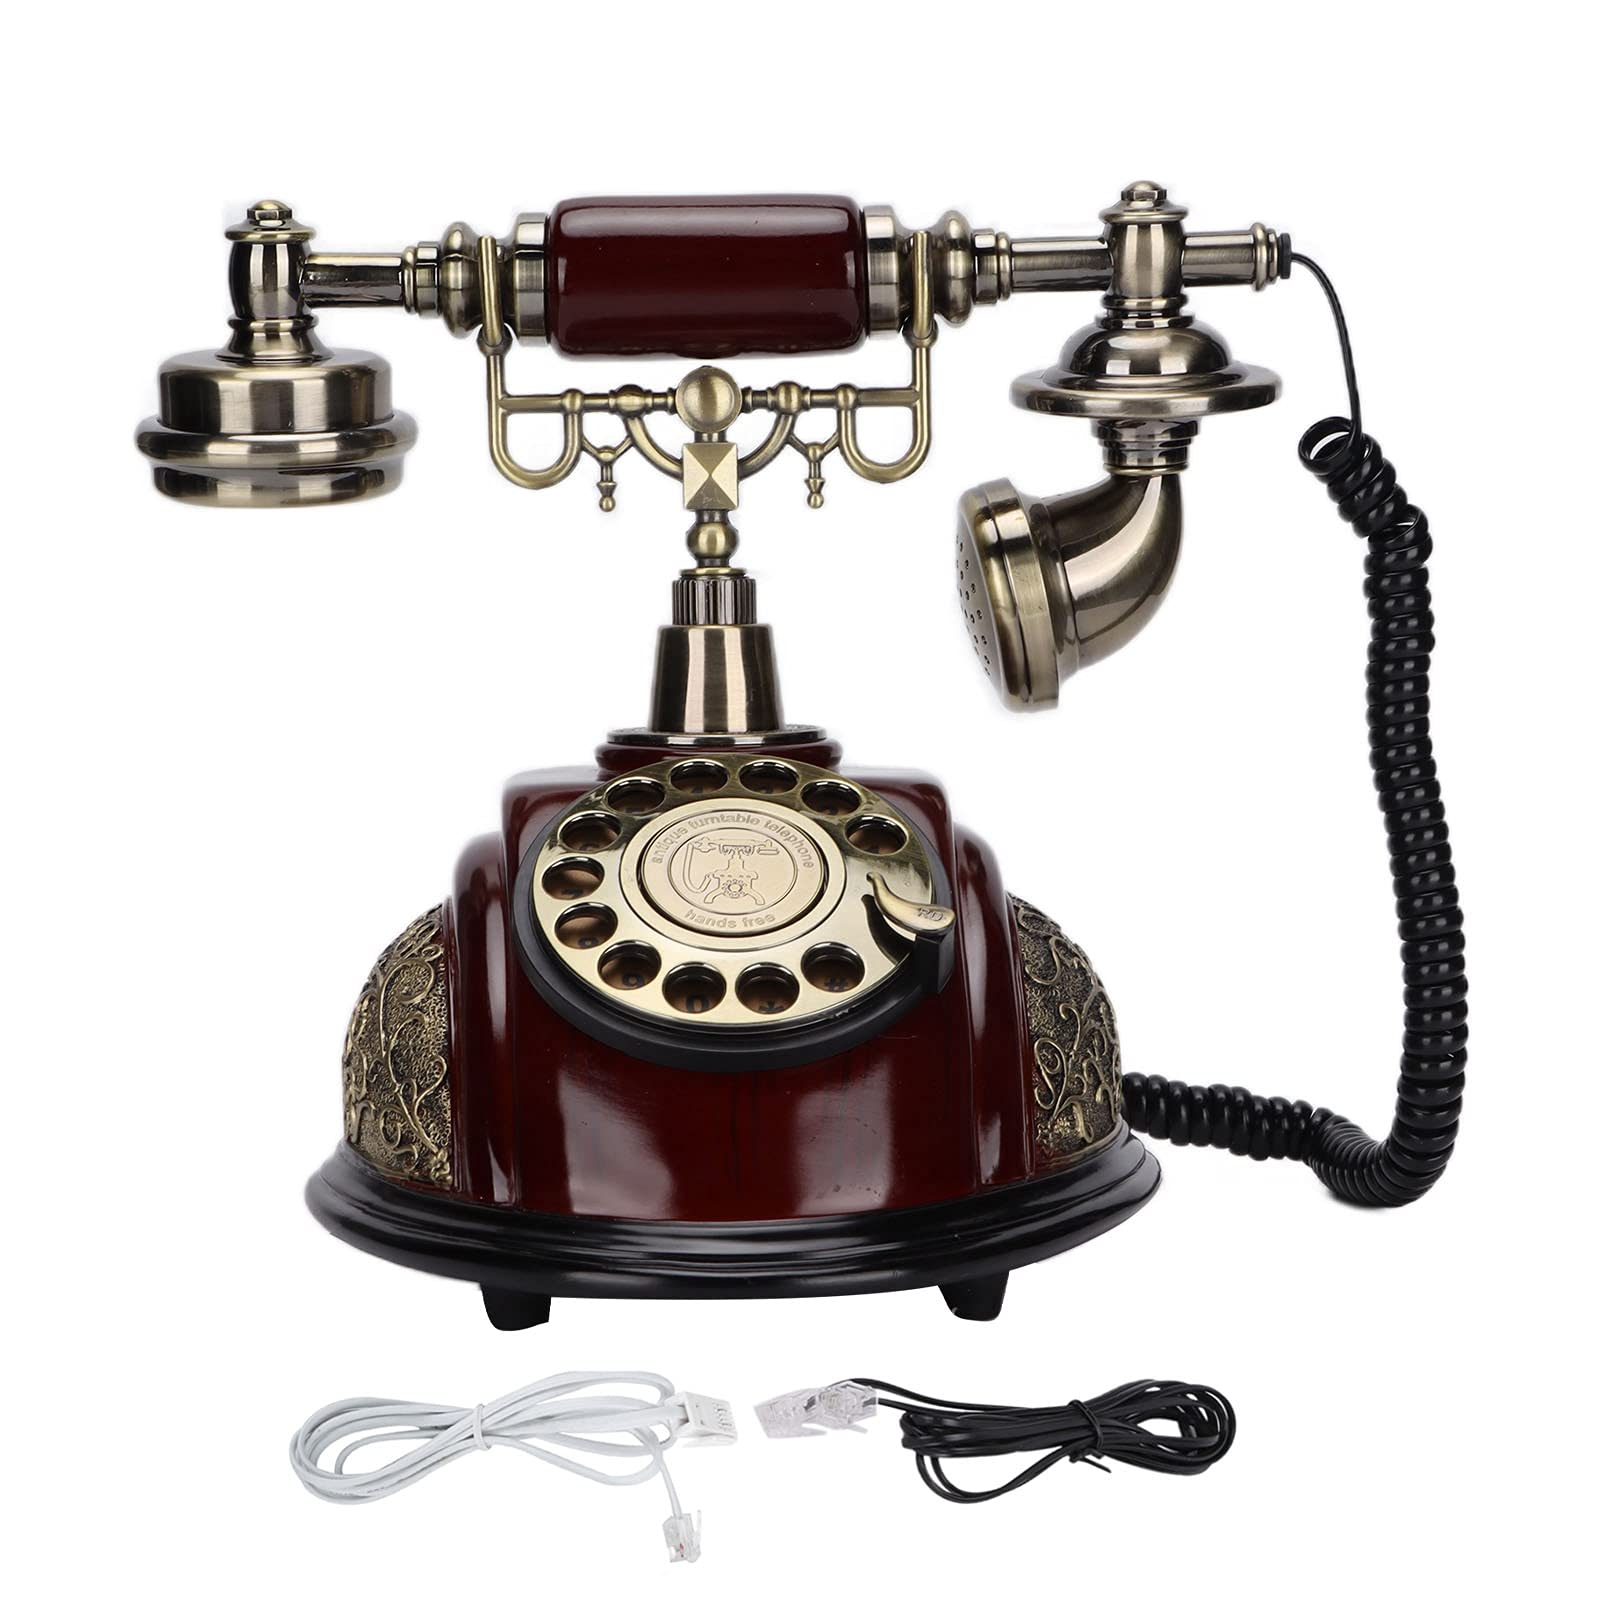 Retro Antique Telephone, Dial Retro Old Fashioned Landline, Home Office Cafe Bar Decor, European Style Landline Decor Collector Gift